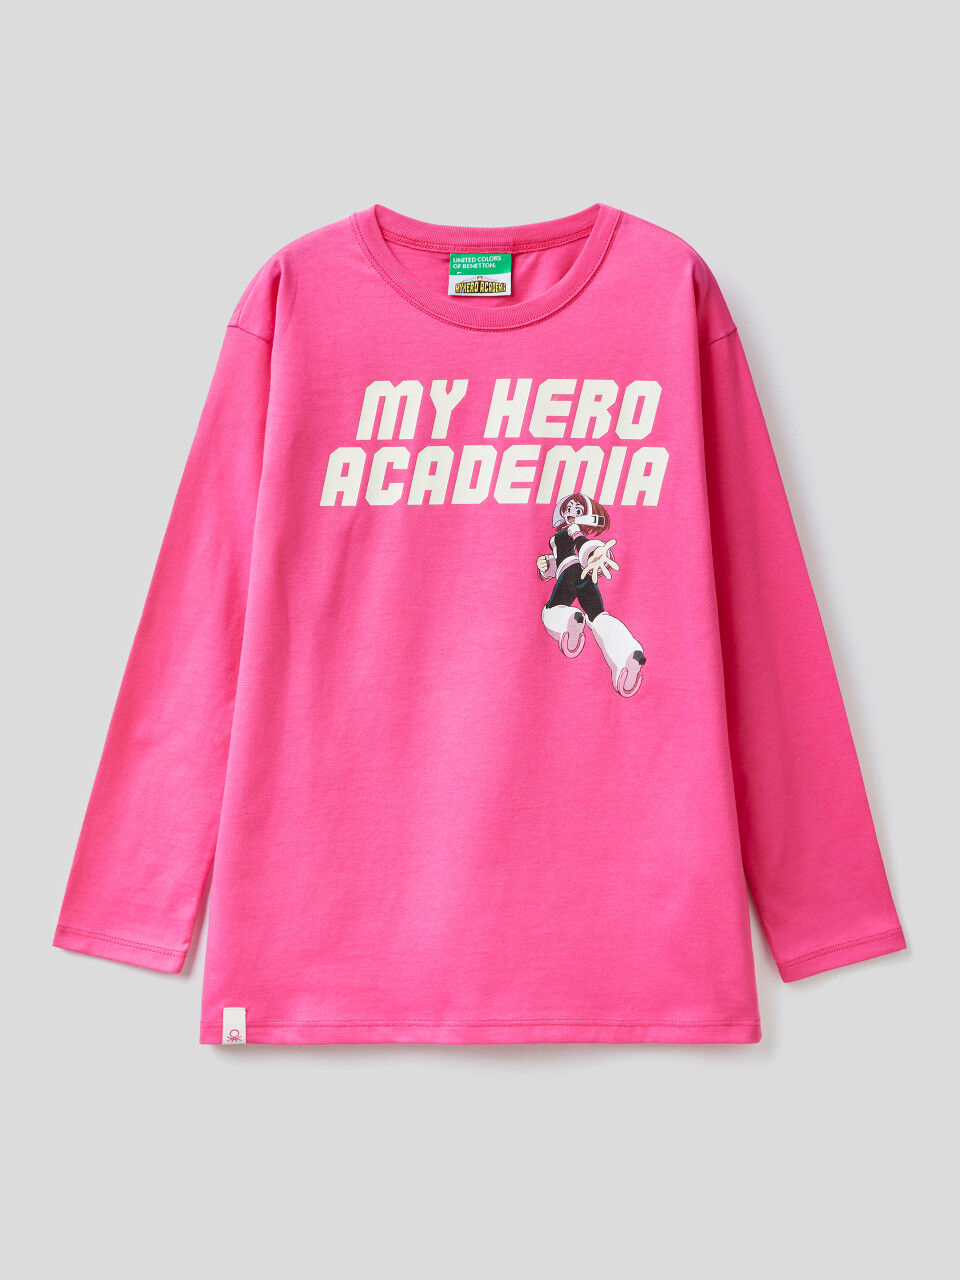 "My Hero Academia" t-shirt in warm cotton